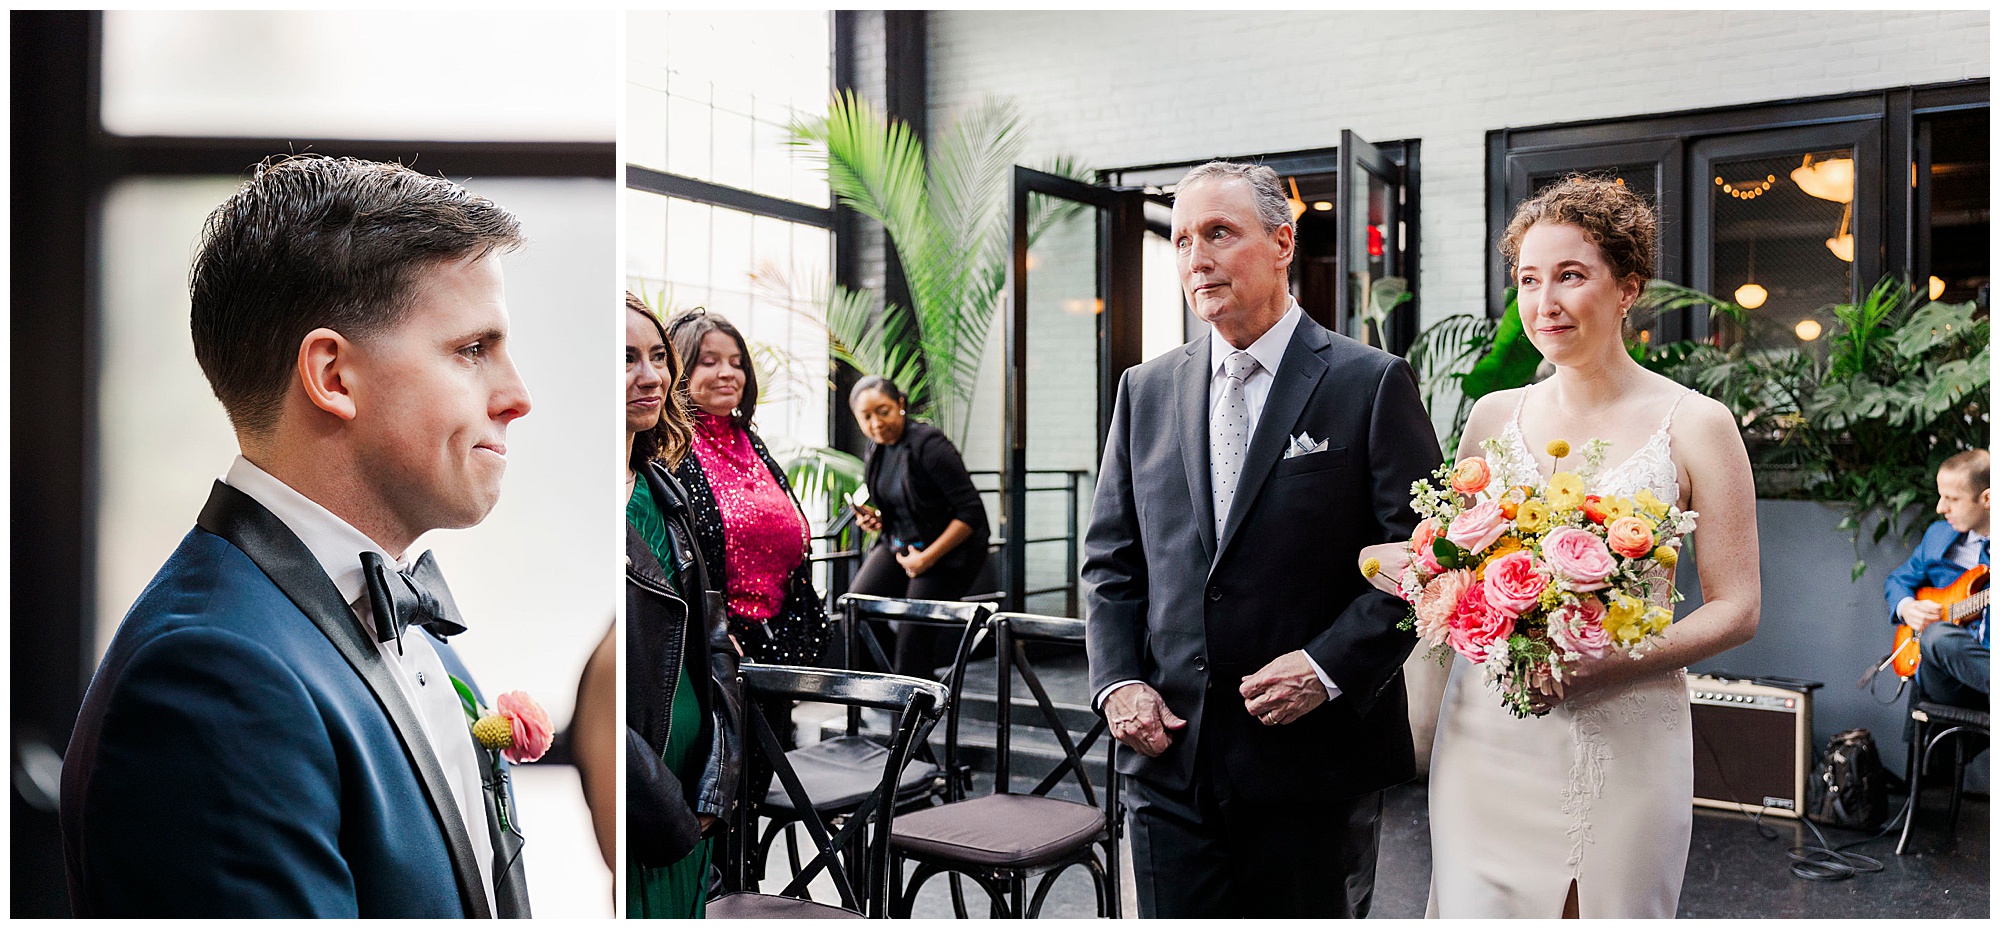 Jaw-Dropping wedding photos at royal palms shuffleboard in brooklyn